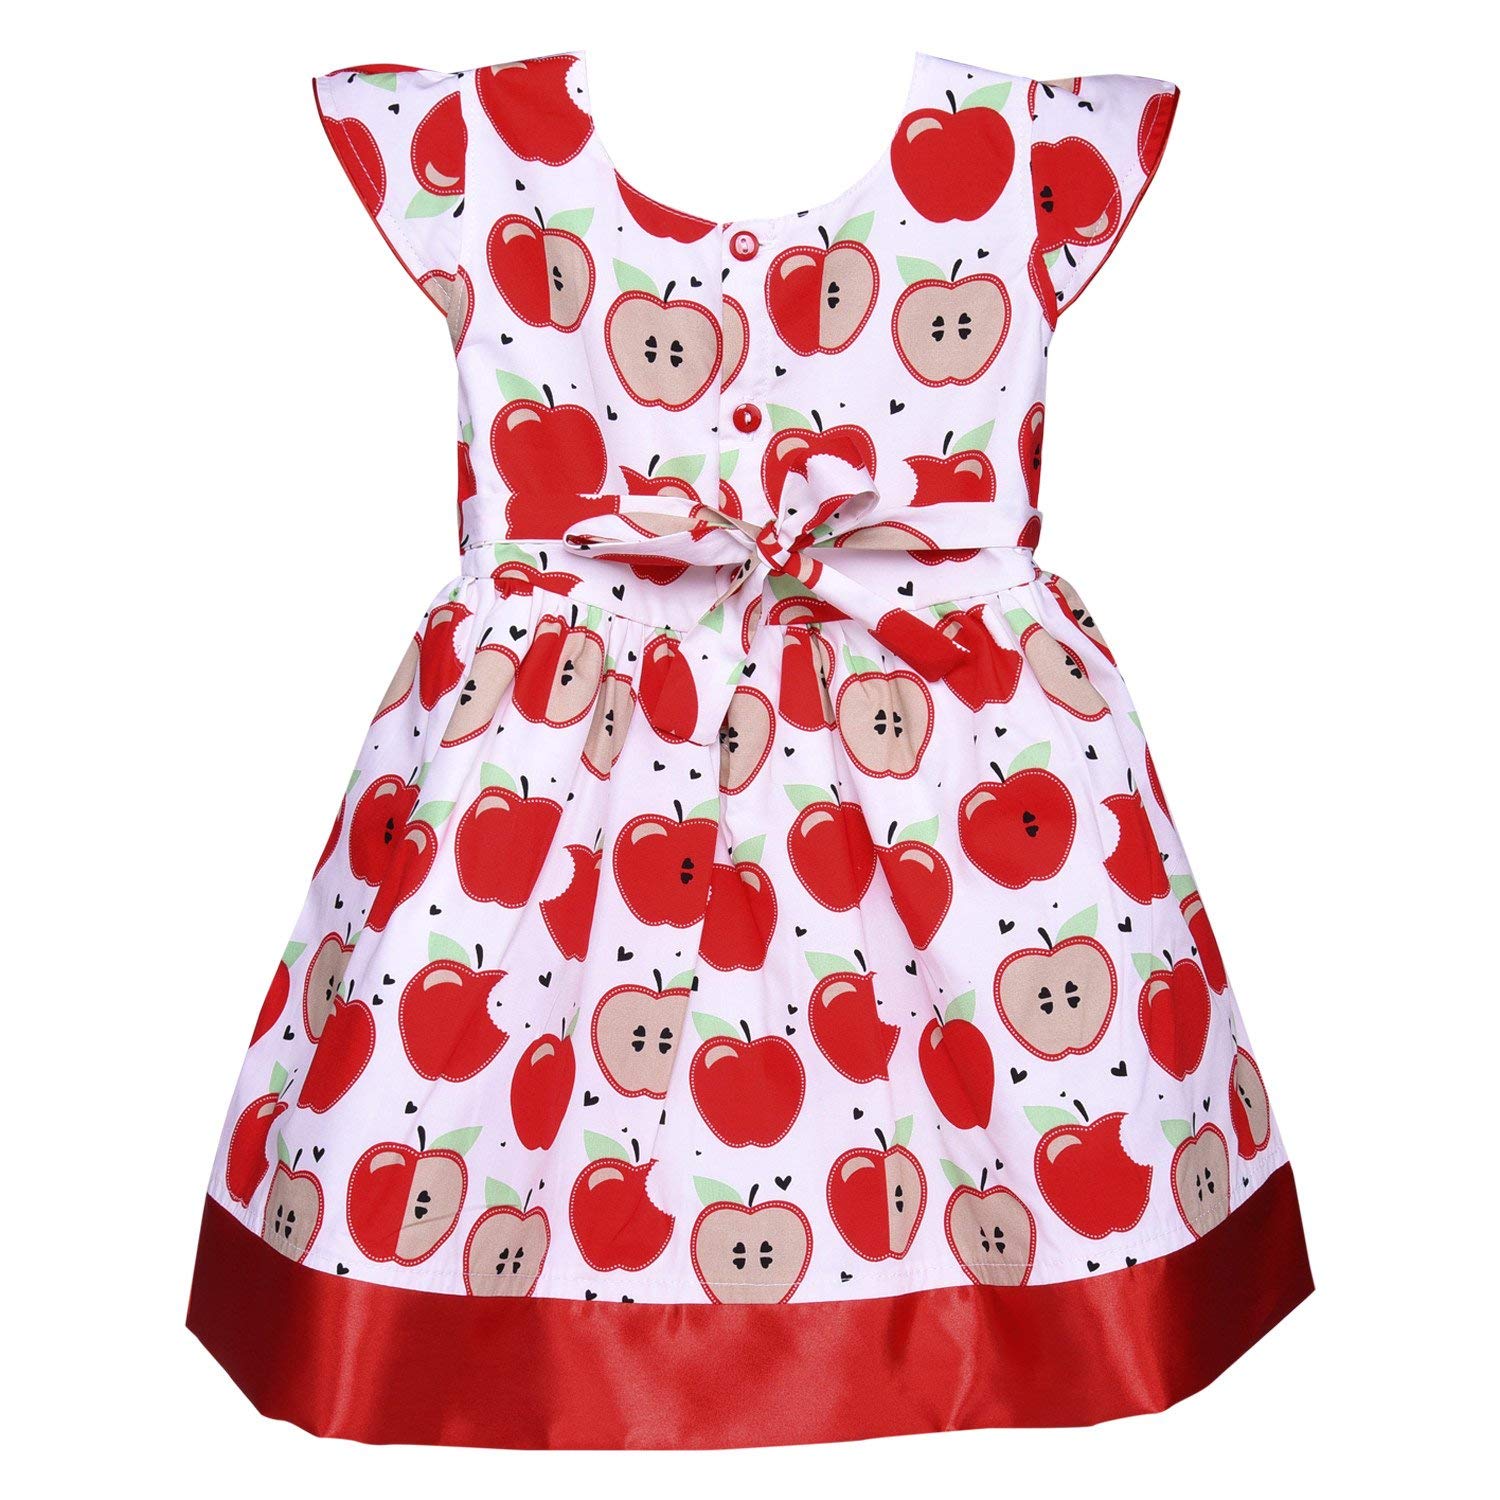 Baby Girls Party wear Dress ctn266 - Wish Karo Cotton Wear - frocks Cotton Wear - baby dress